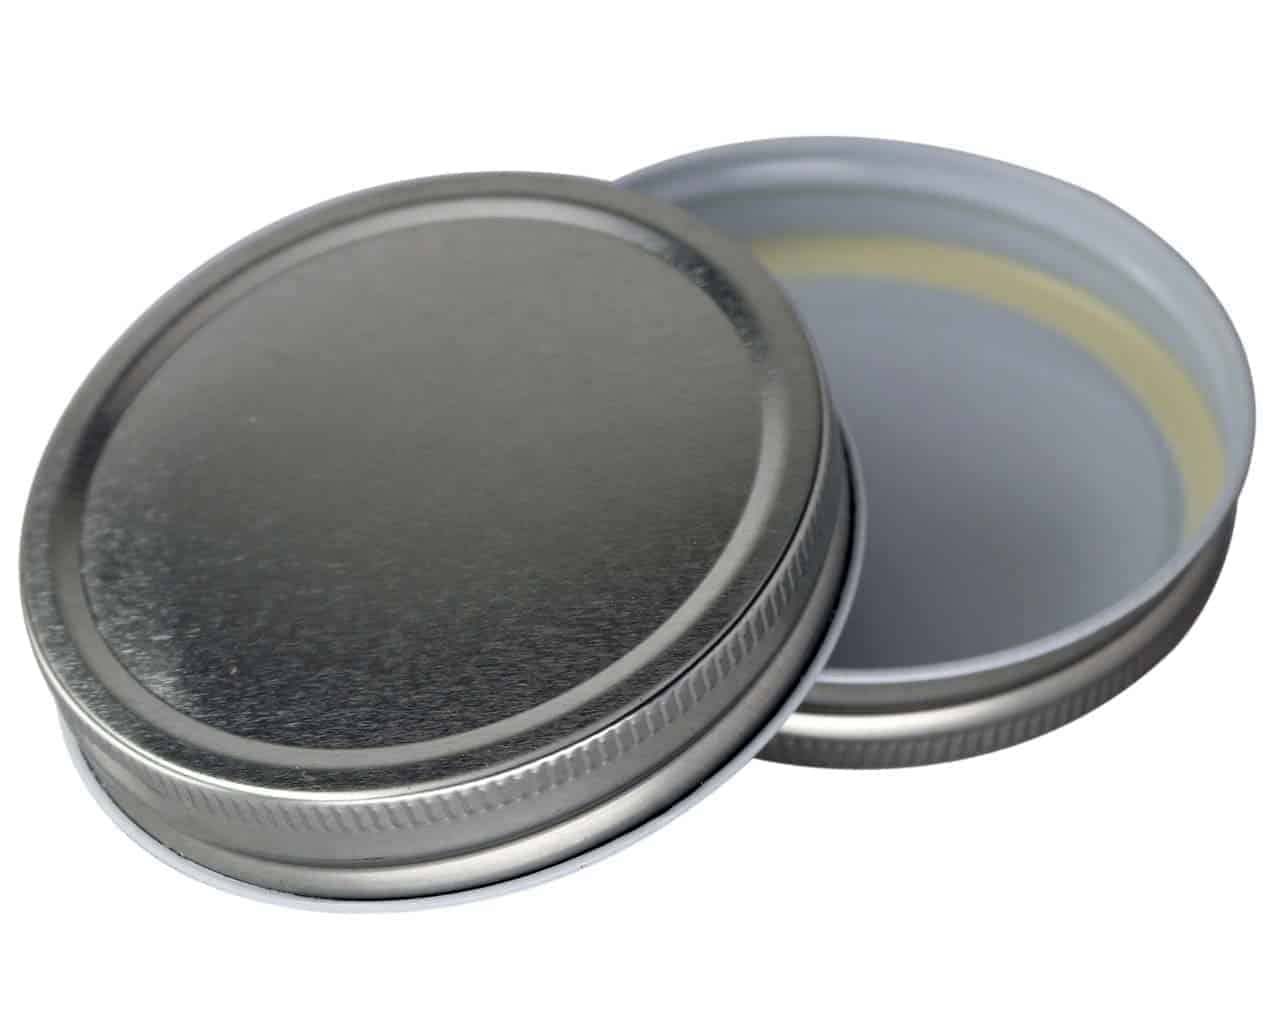 Shiny Metal Storage Lids for Mason Jars 6 Pack